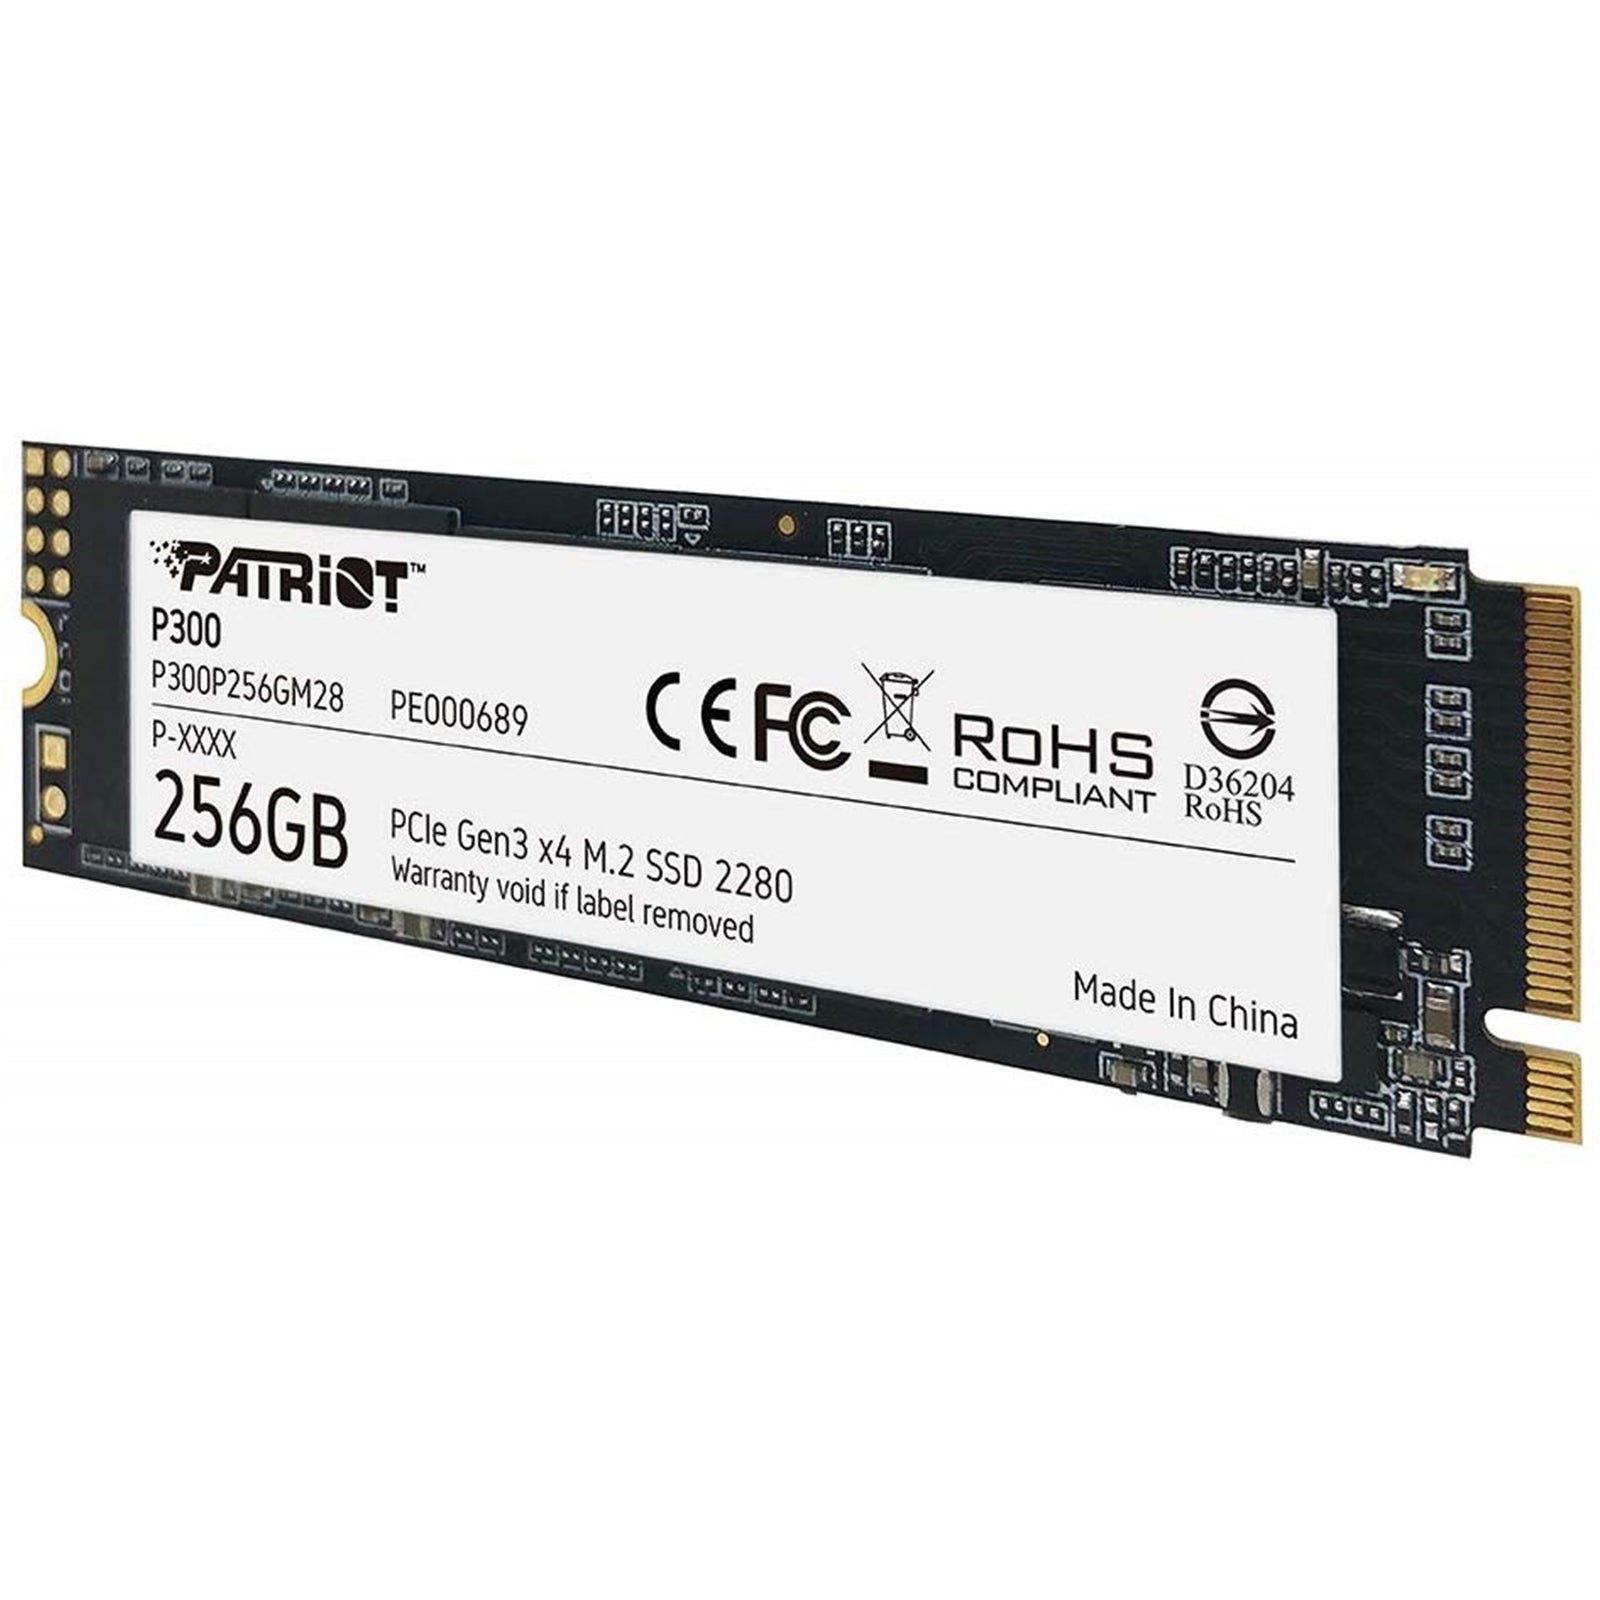 Patriot P300 M.2 PCIe Gen3 x4 256GB SSD